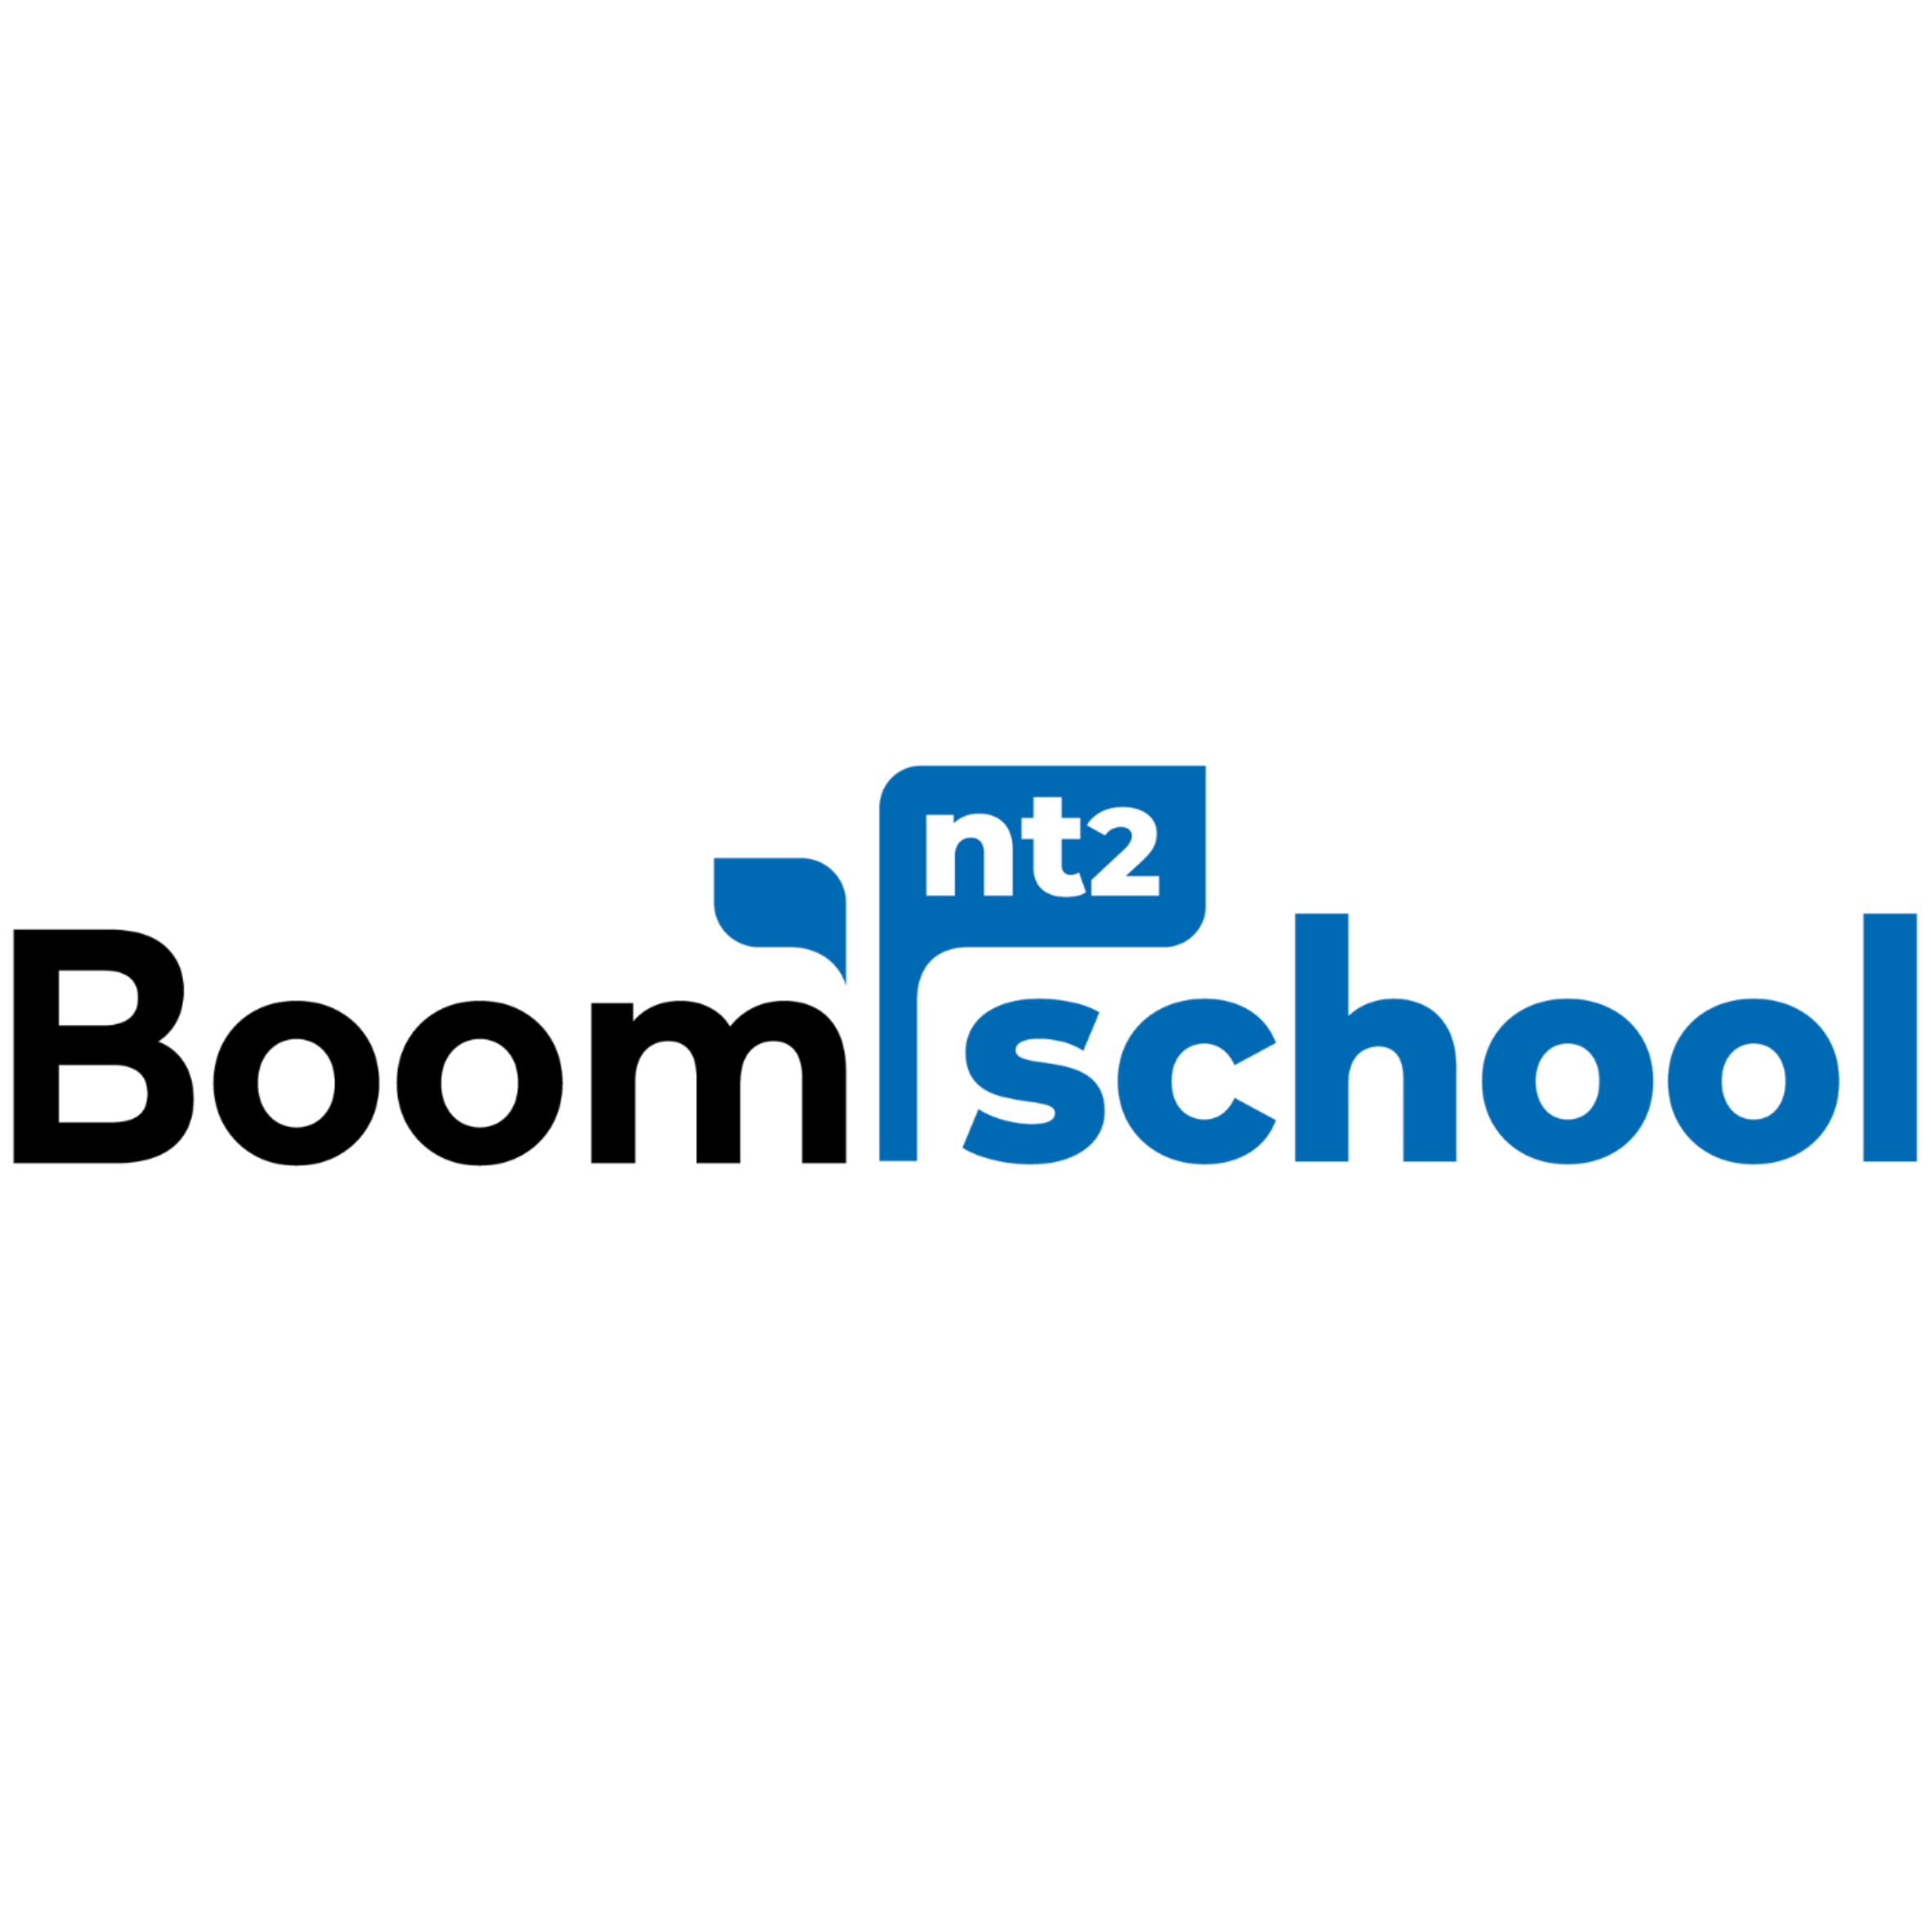 Boom Nt2 School's logo